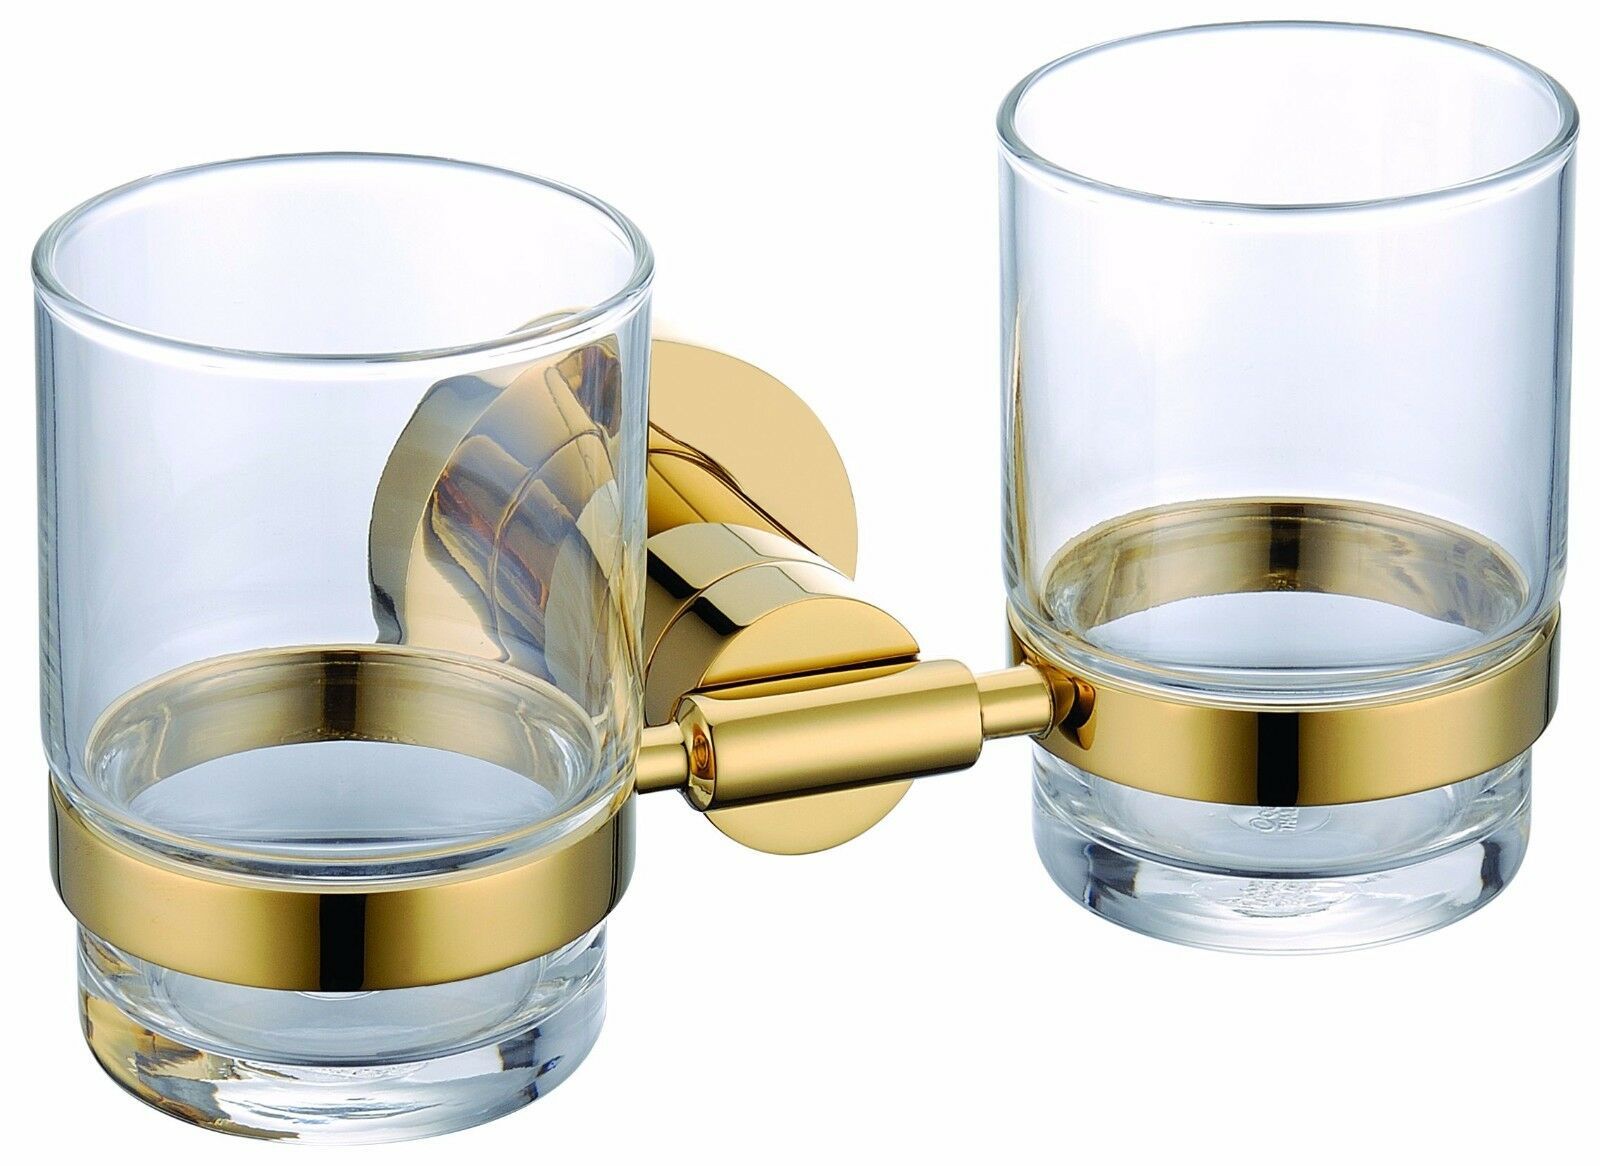 Gold clour Bathroom TUMBLER HOLDER TEECH DOUBLE CUP Holder round  design - $49.39